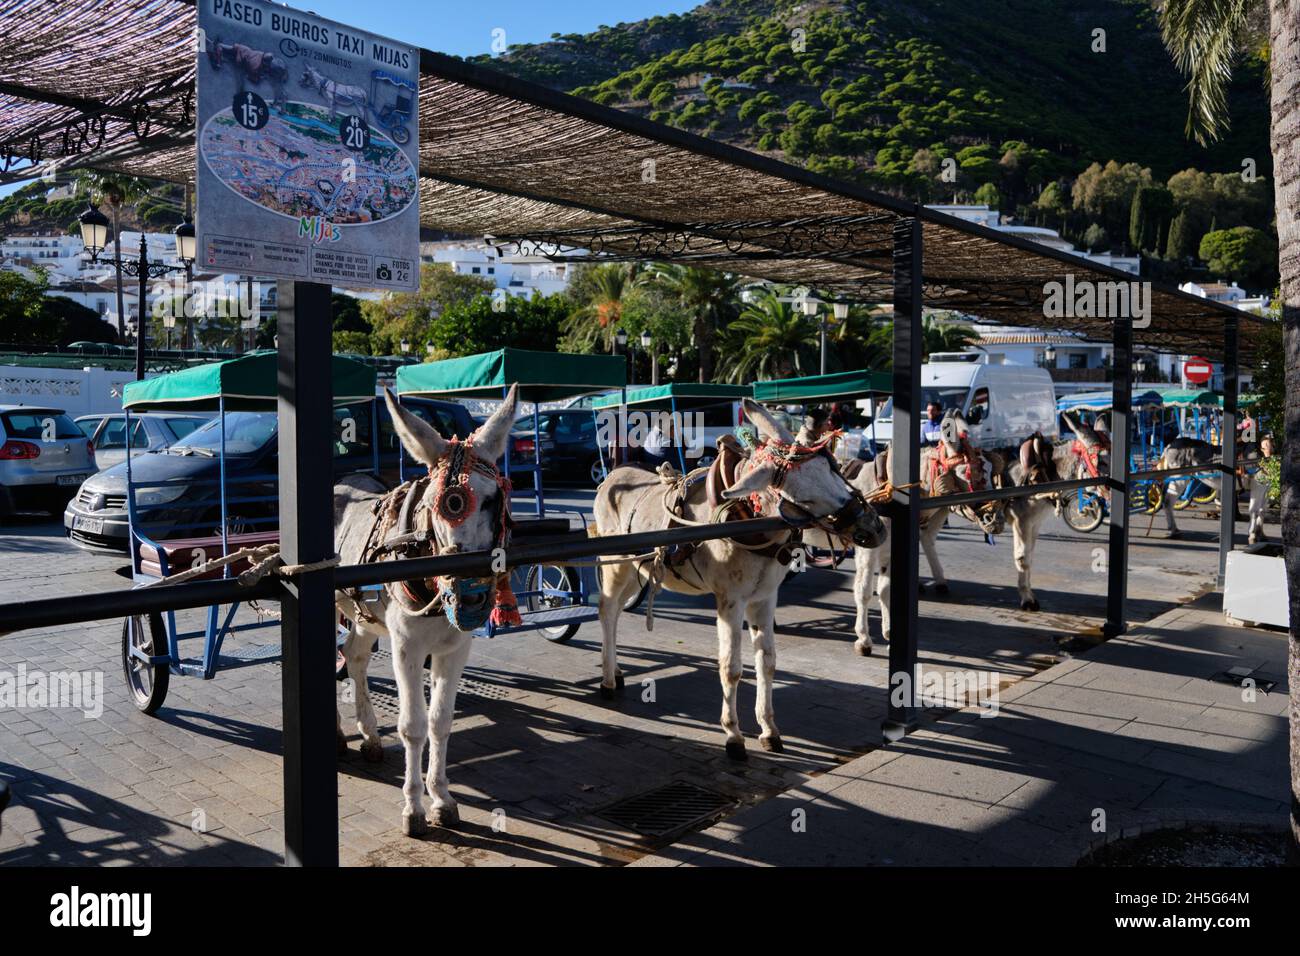 Donkeys - Burro Taxi, Mijas Pueblo, Malaga province, Andalusia, Spain. Stock Photo